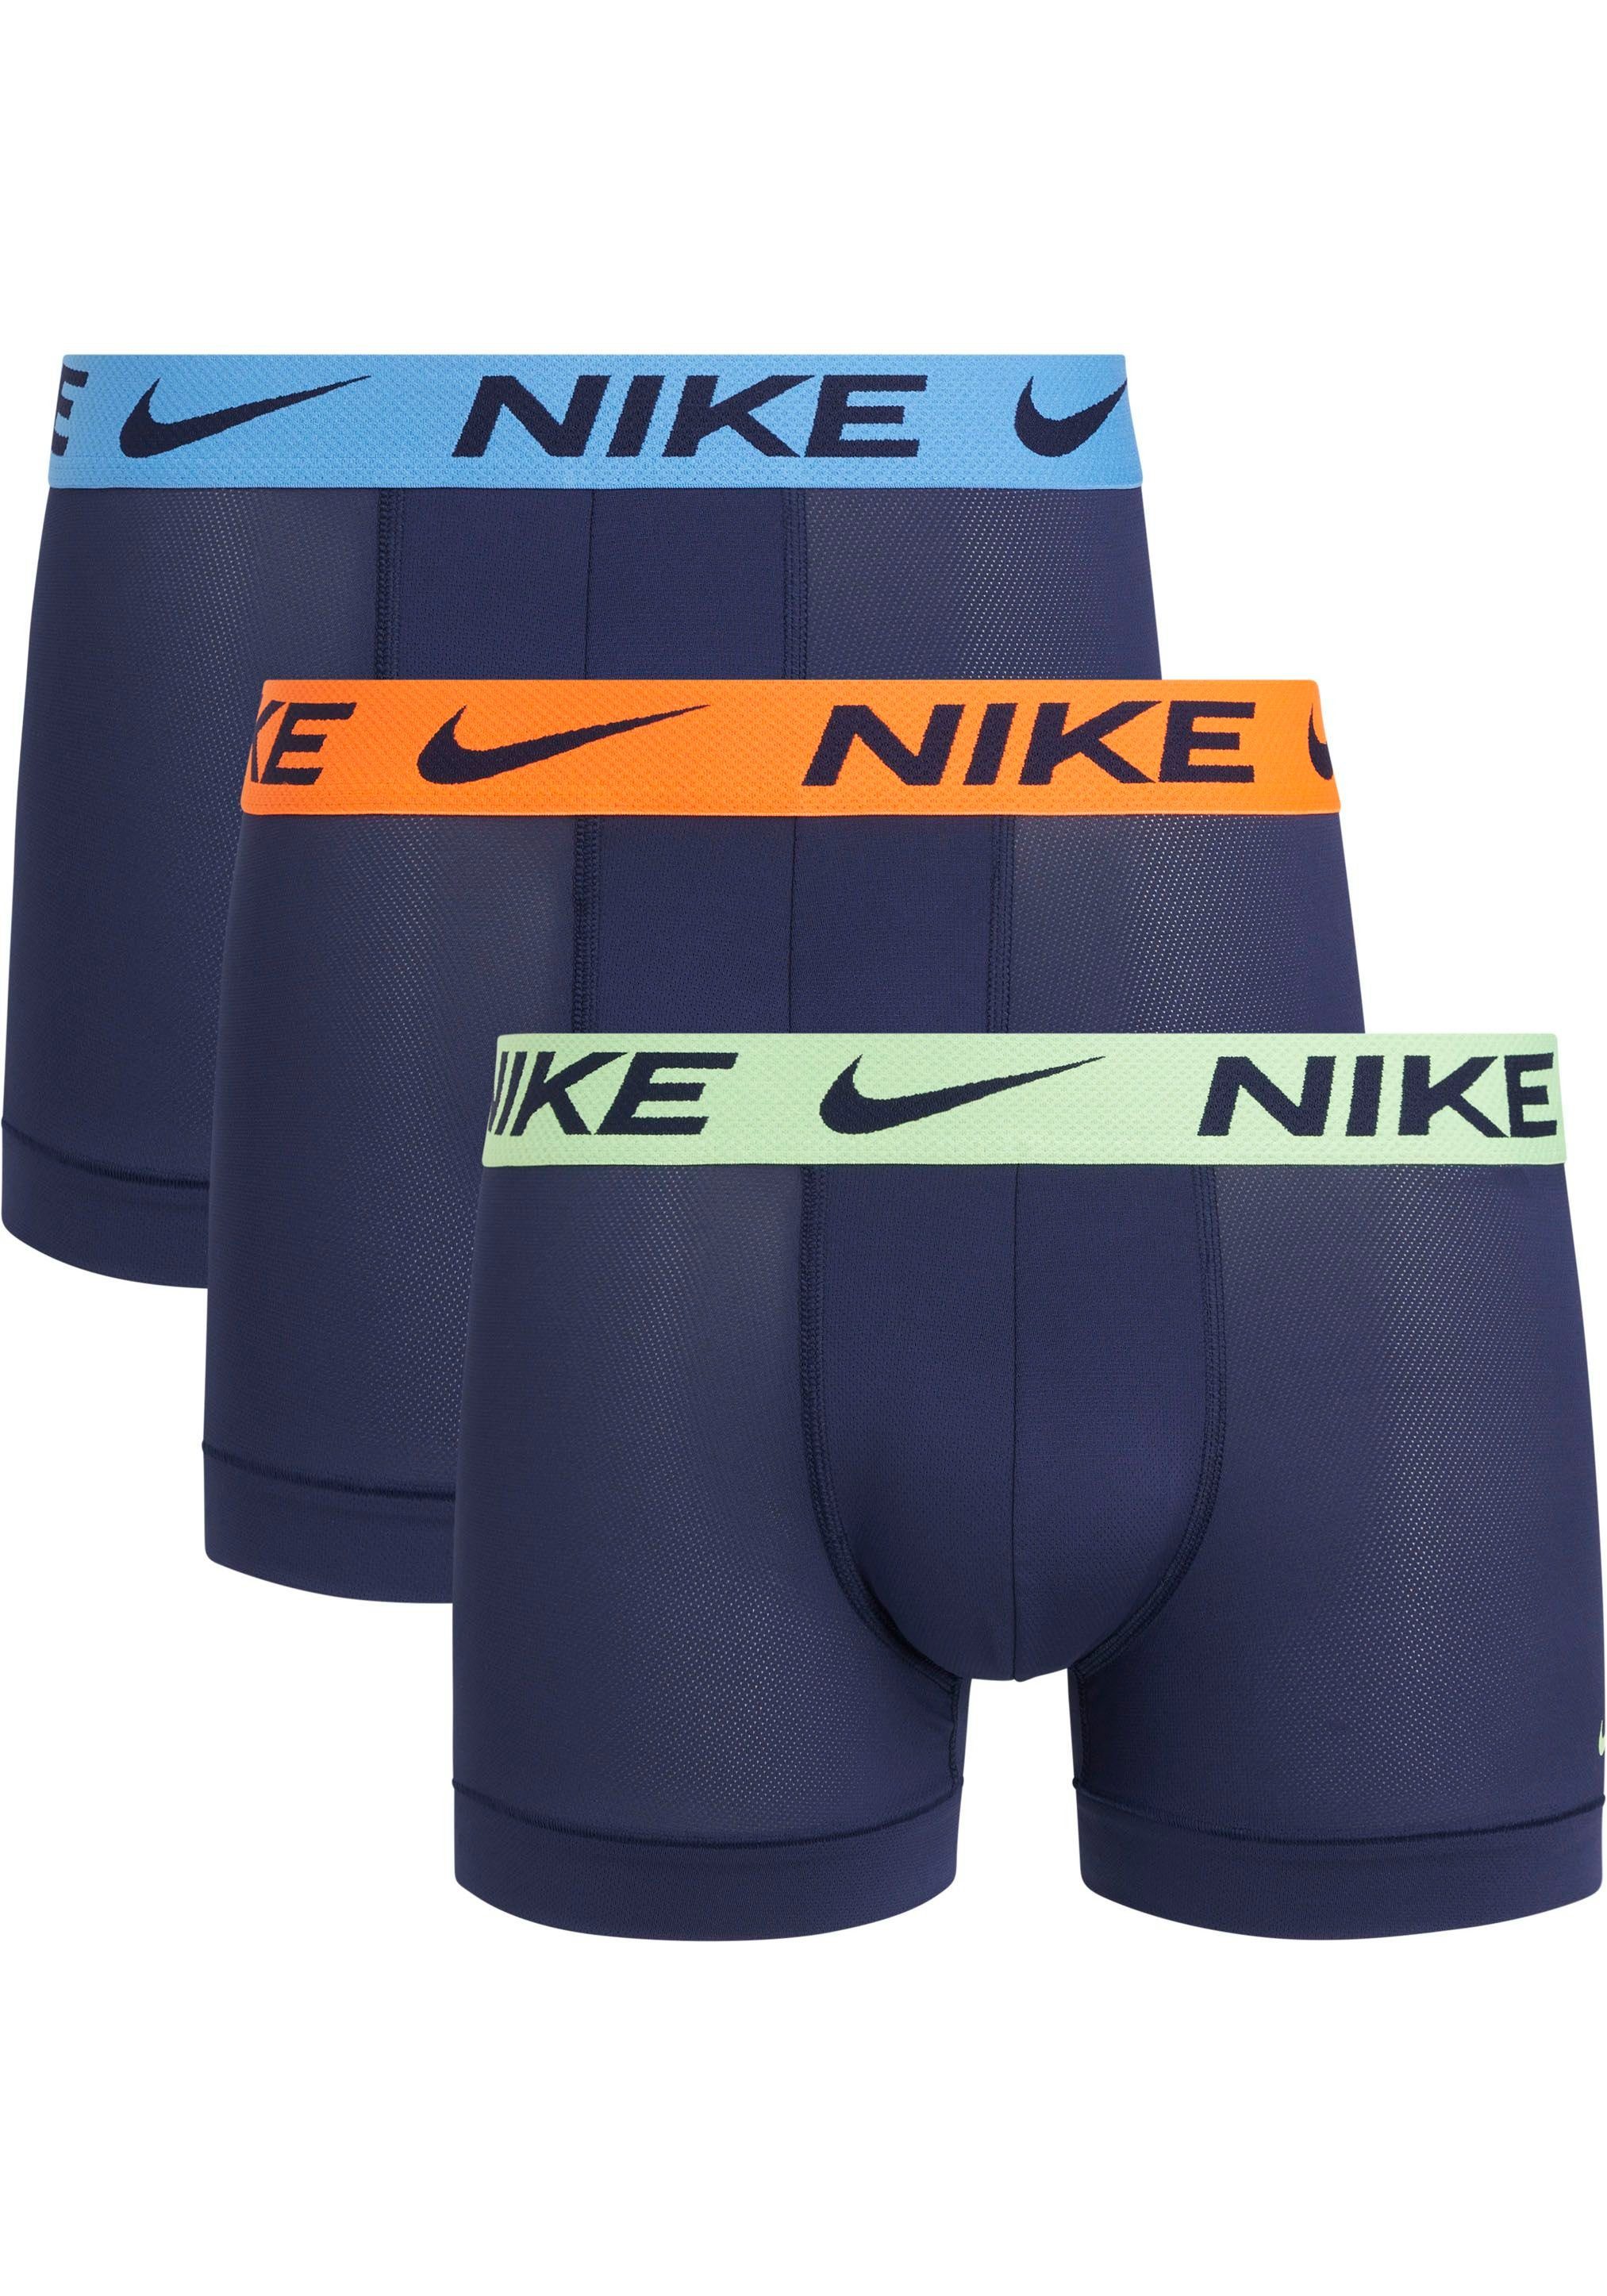 NIKE Underwear Trunk TRUNK 3PK (Packung, 3er-Pack) mit NIKE Logo-Elastikbund (3 Stück) blau